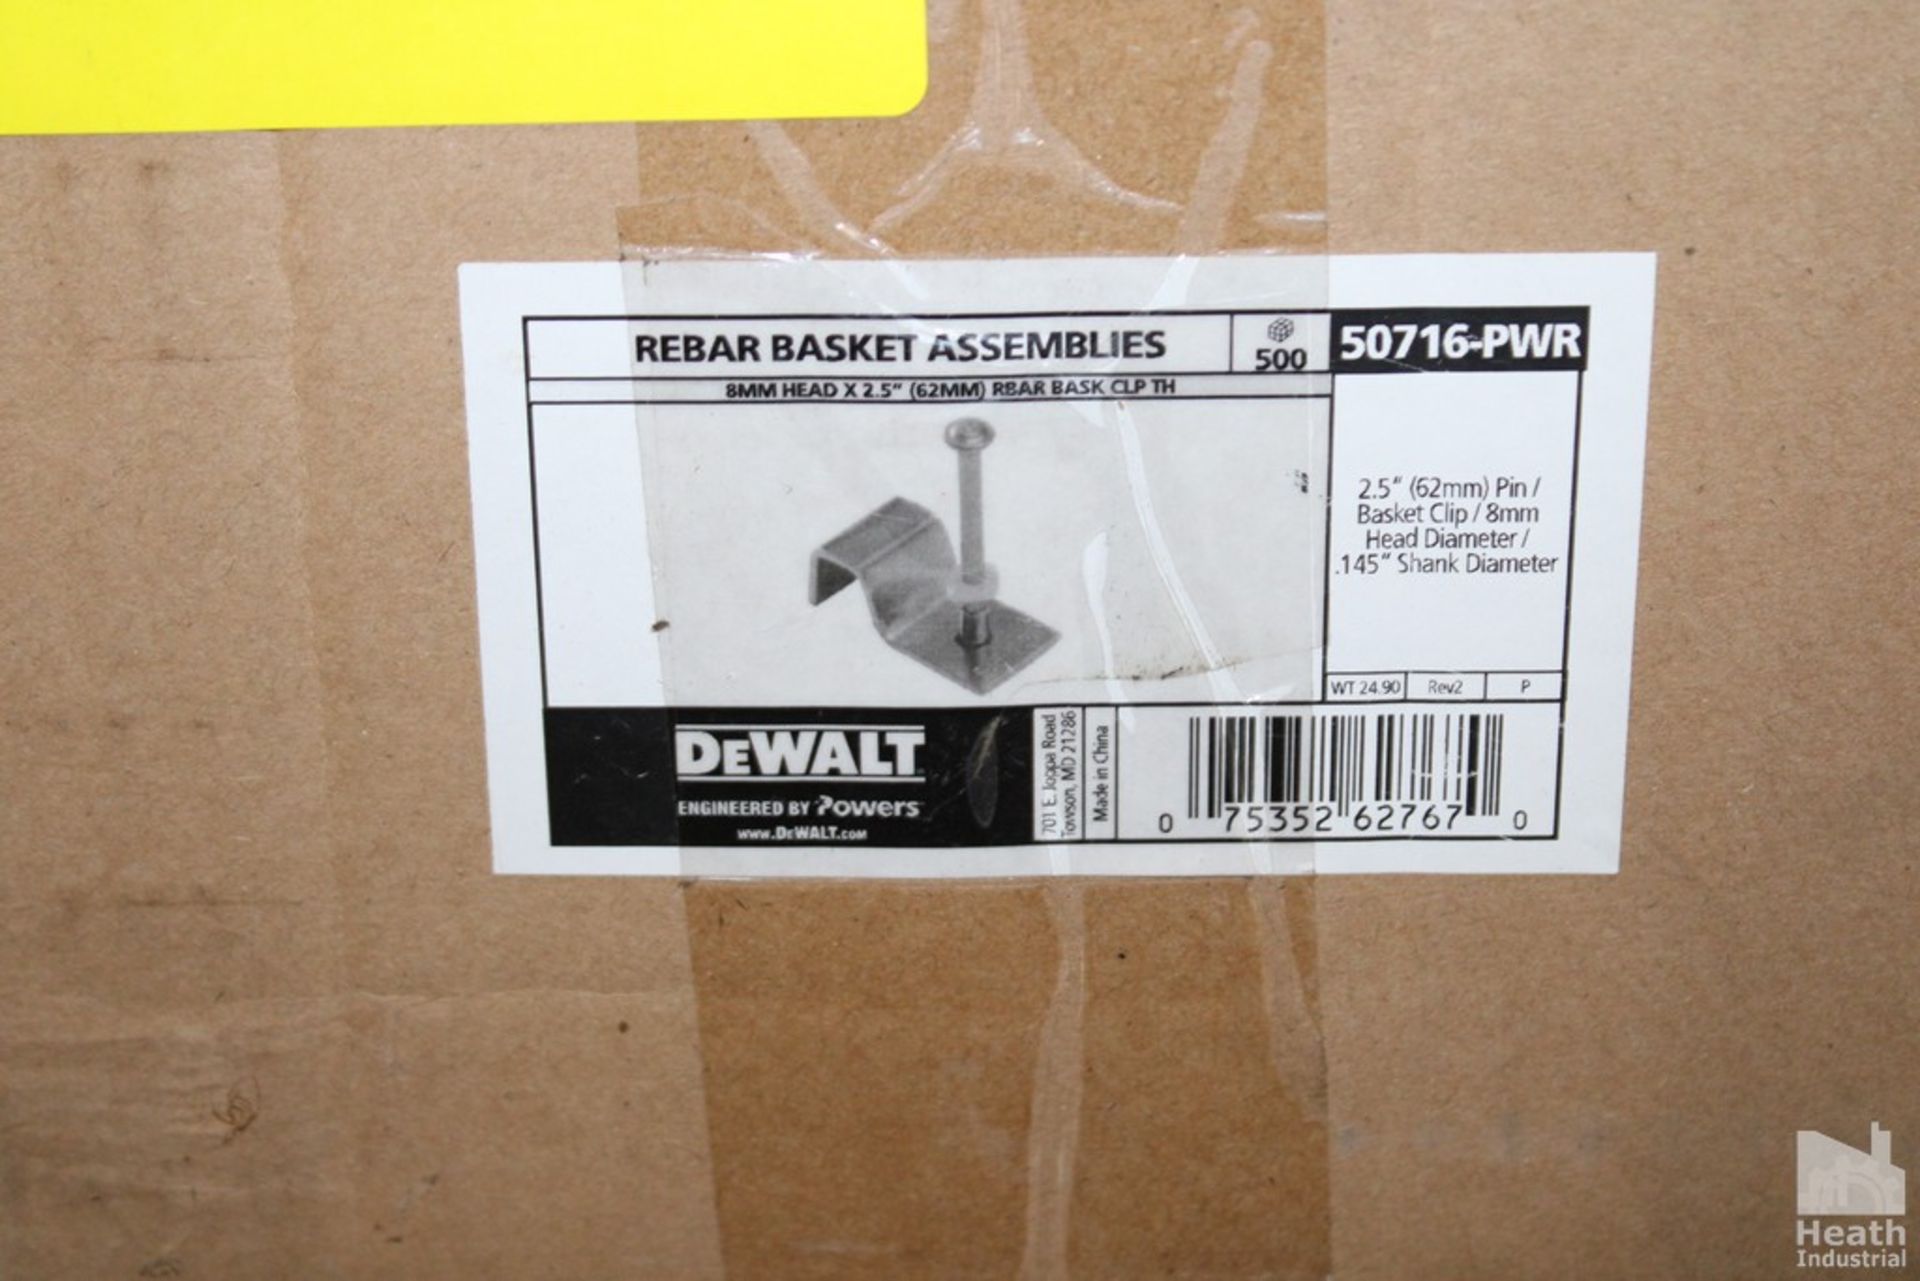 (3) CASES OF DEWALT MODEL 50716-PWR REBAR GASKET ASSEMBLIES - Image 2 of 2